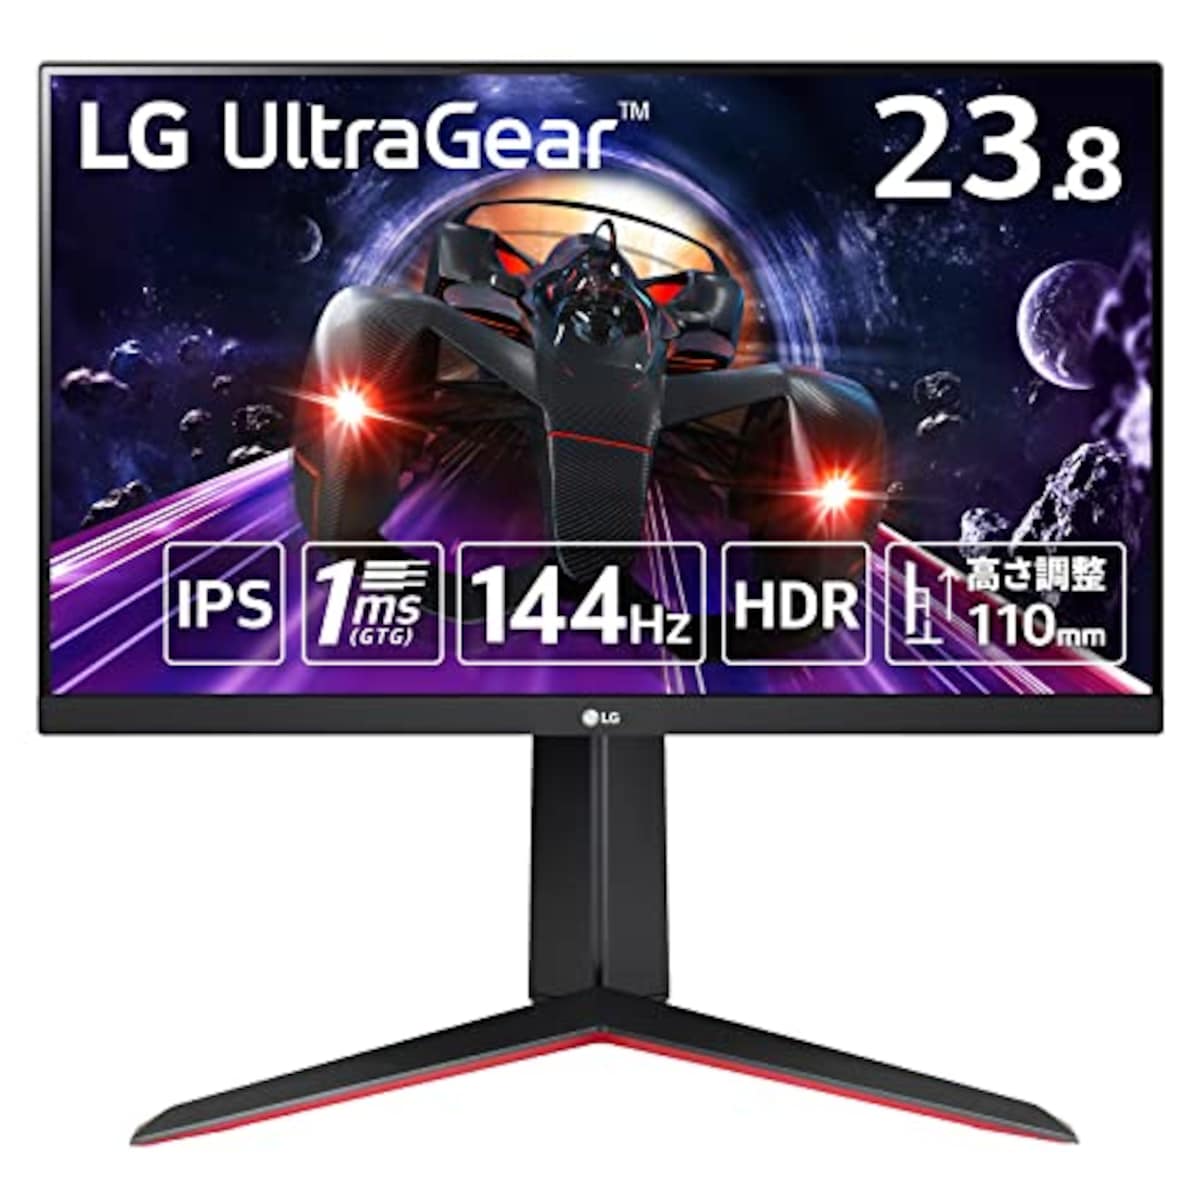 【Amazon.co.jp 限定】LG ゲーミングモニター UltraGear 24GN65R-B 23.8インチ / フルHD/IPS / 144Hz / 1ms(GTG) / HDR/FreeSync Premium/高さ調整、ピボット対応/HDMI、DisplayPort